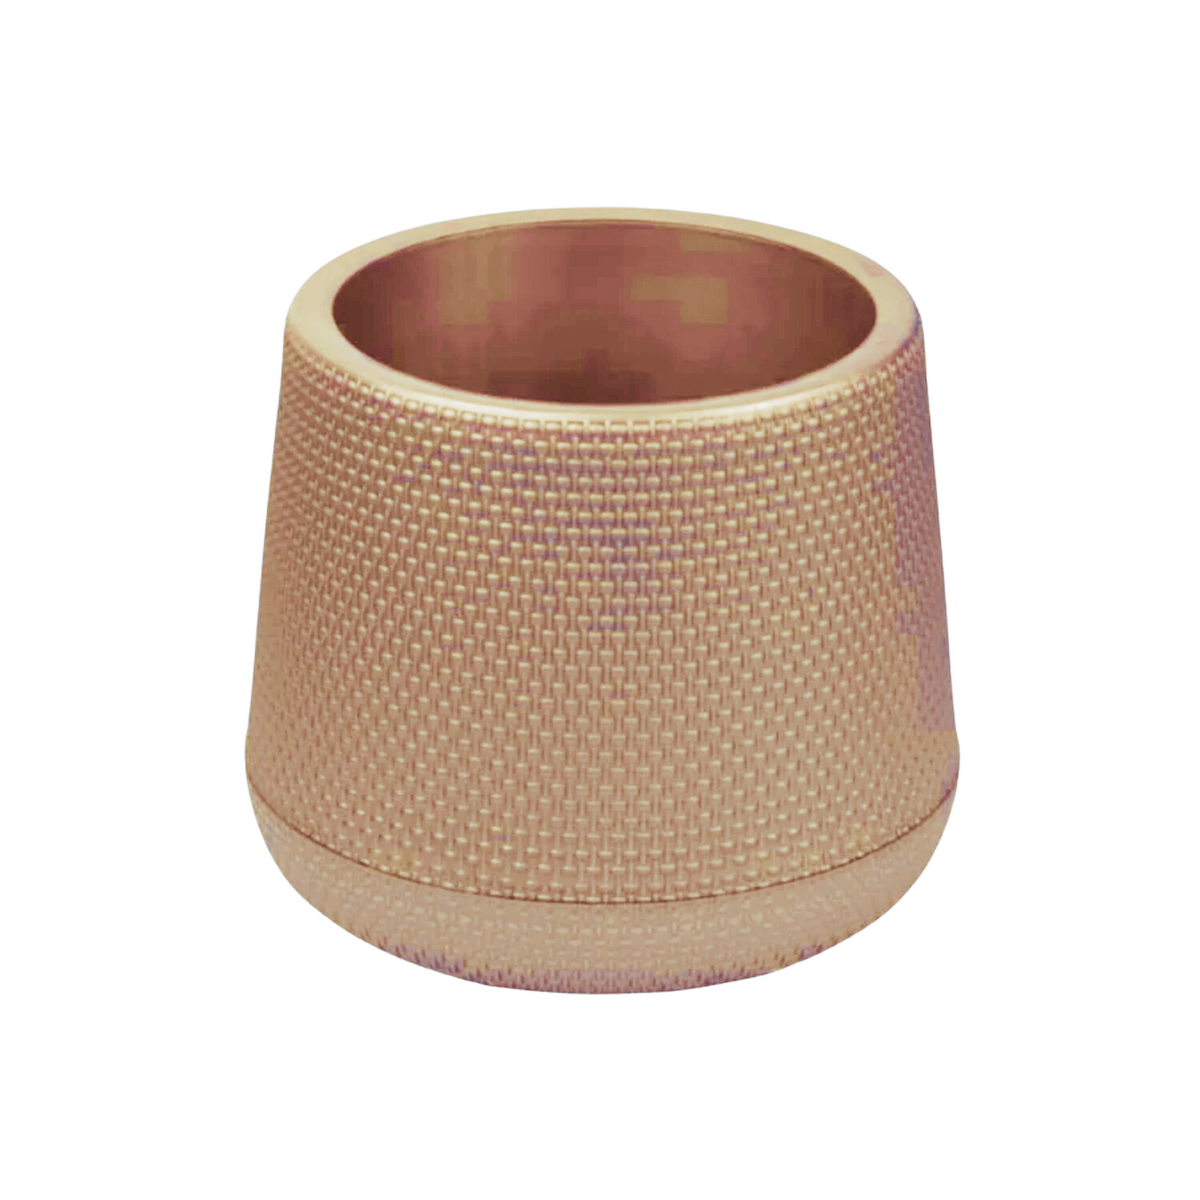 Mudkuda Golden Round Plastic Pot for Home & Garden